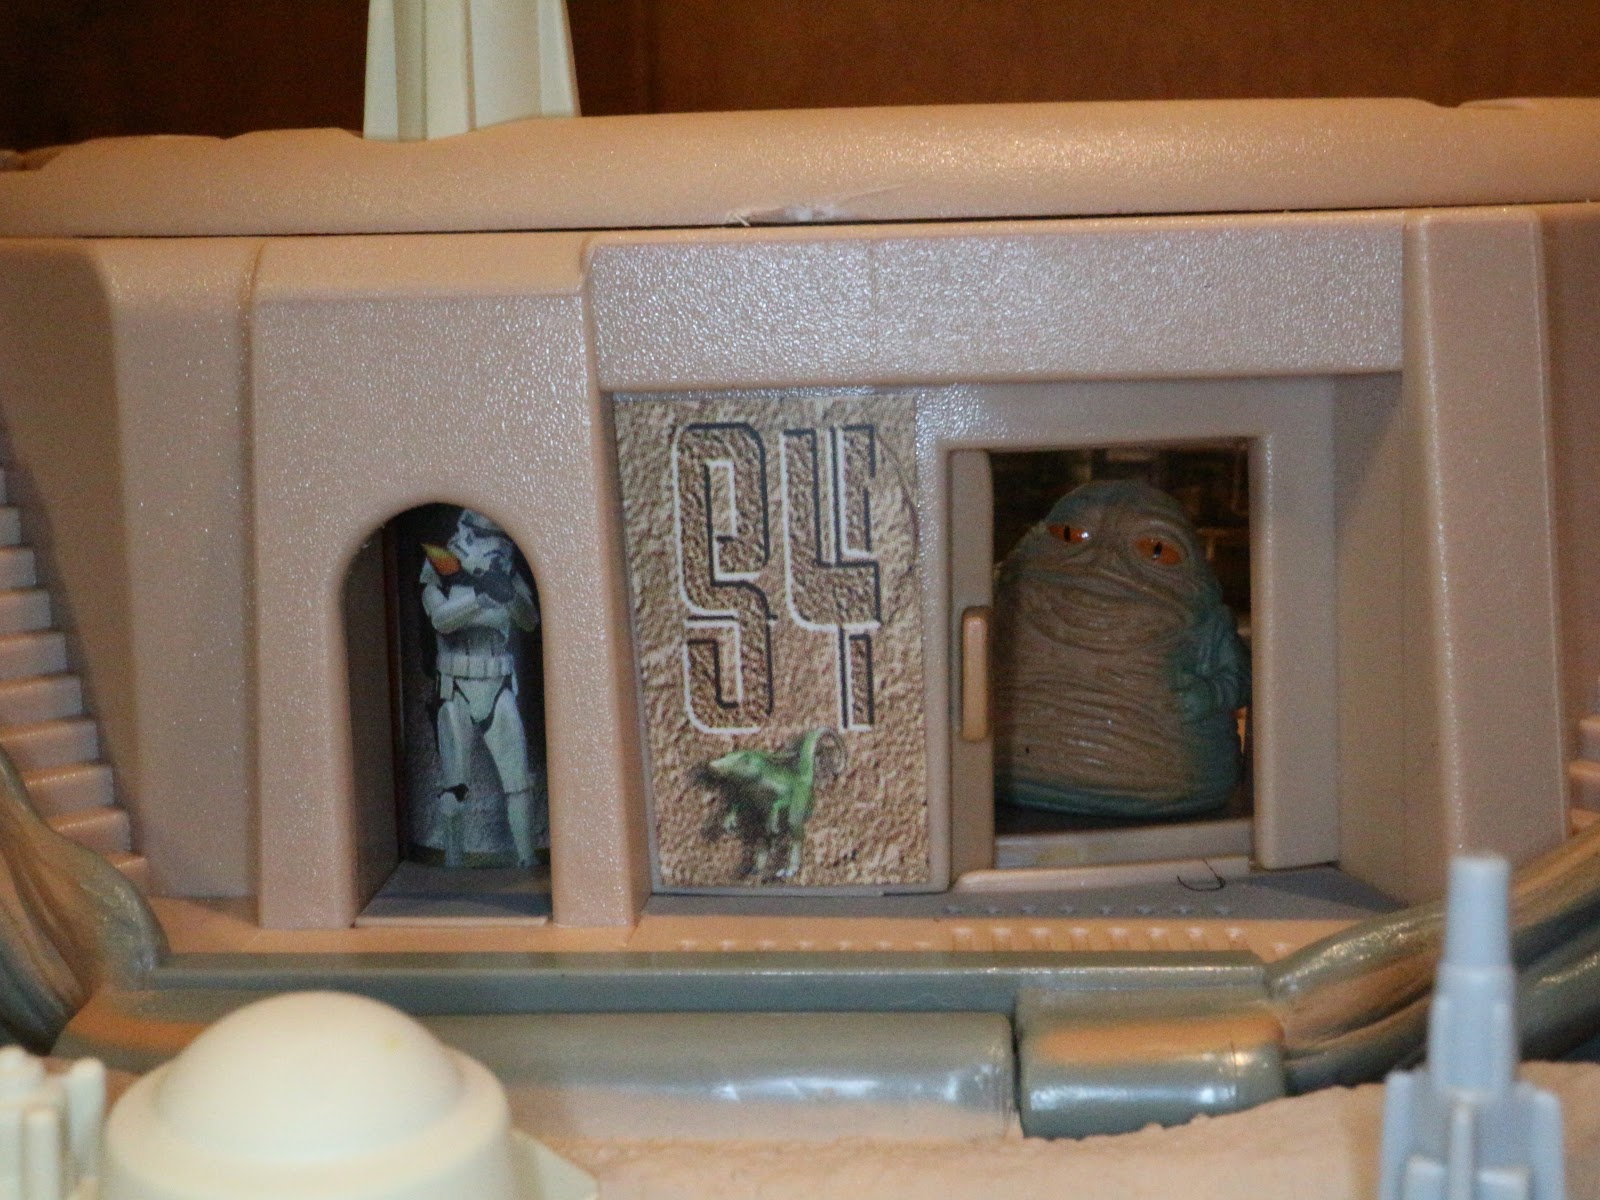 Star Wars C-3PO Micro Machines Tatooine Mos Eisley Cantina Playset Galoob  1994